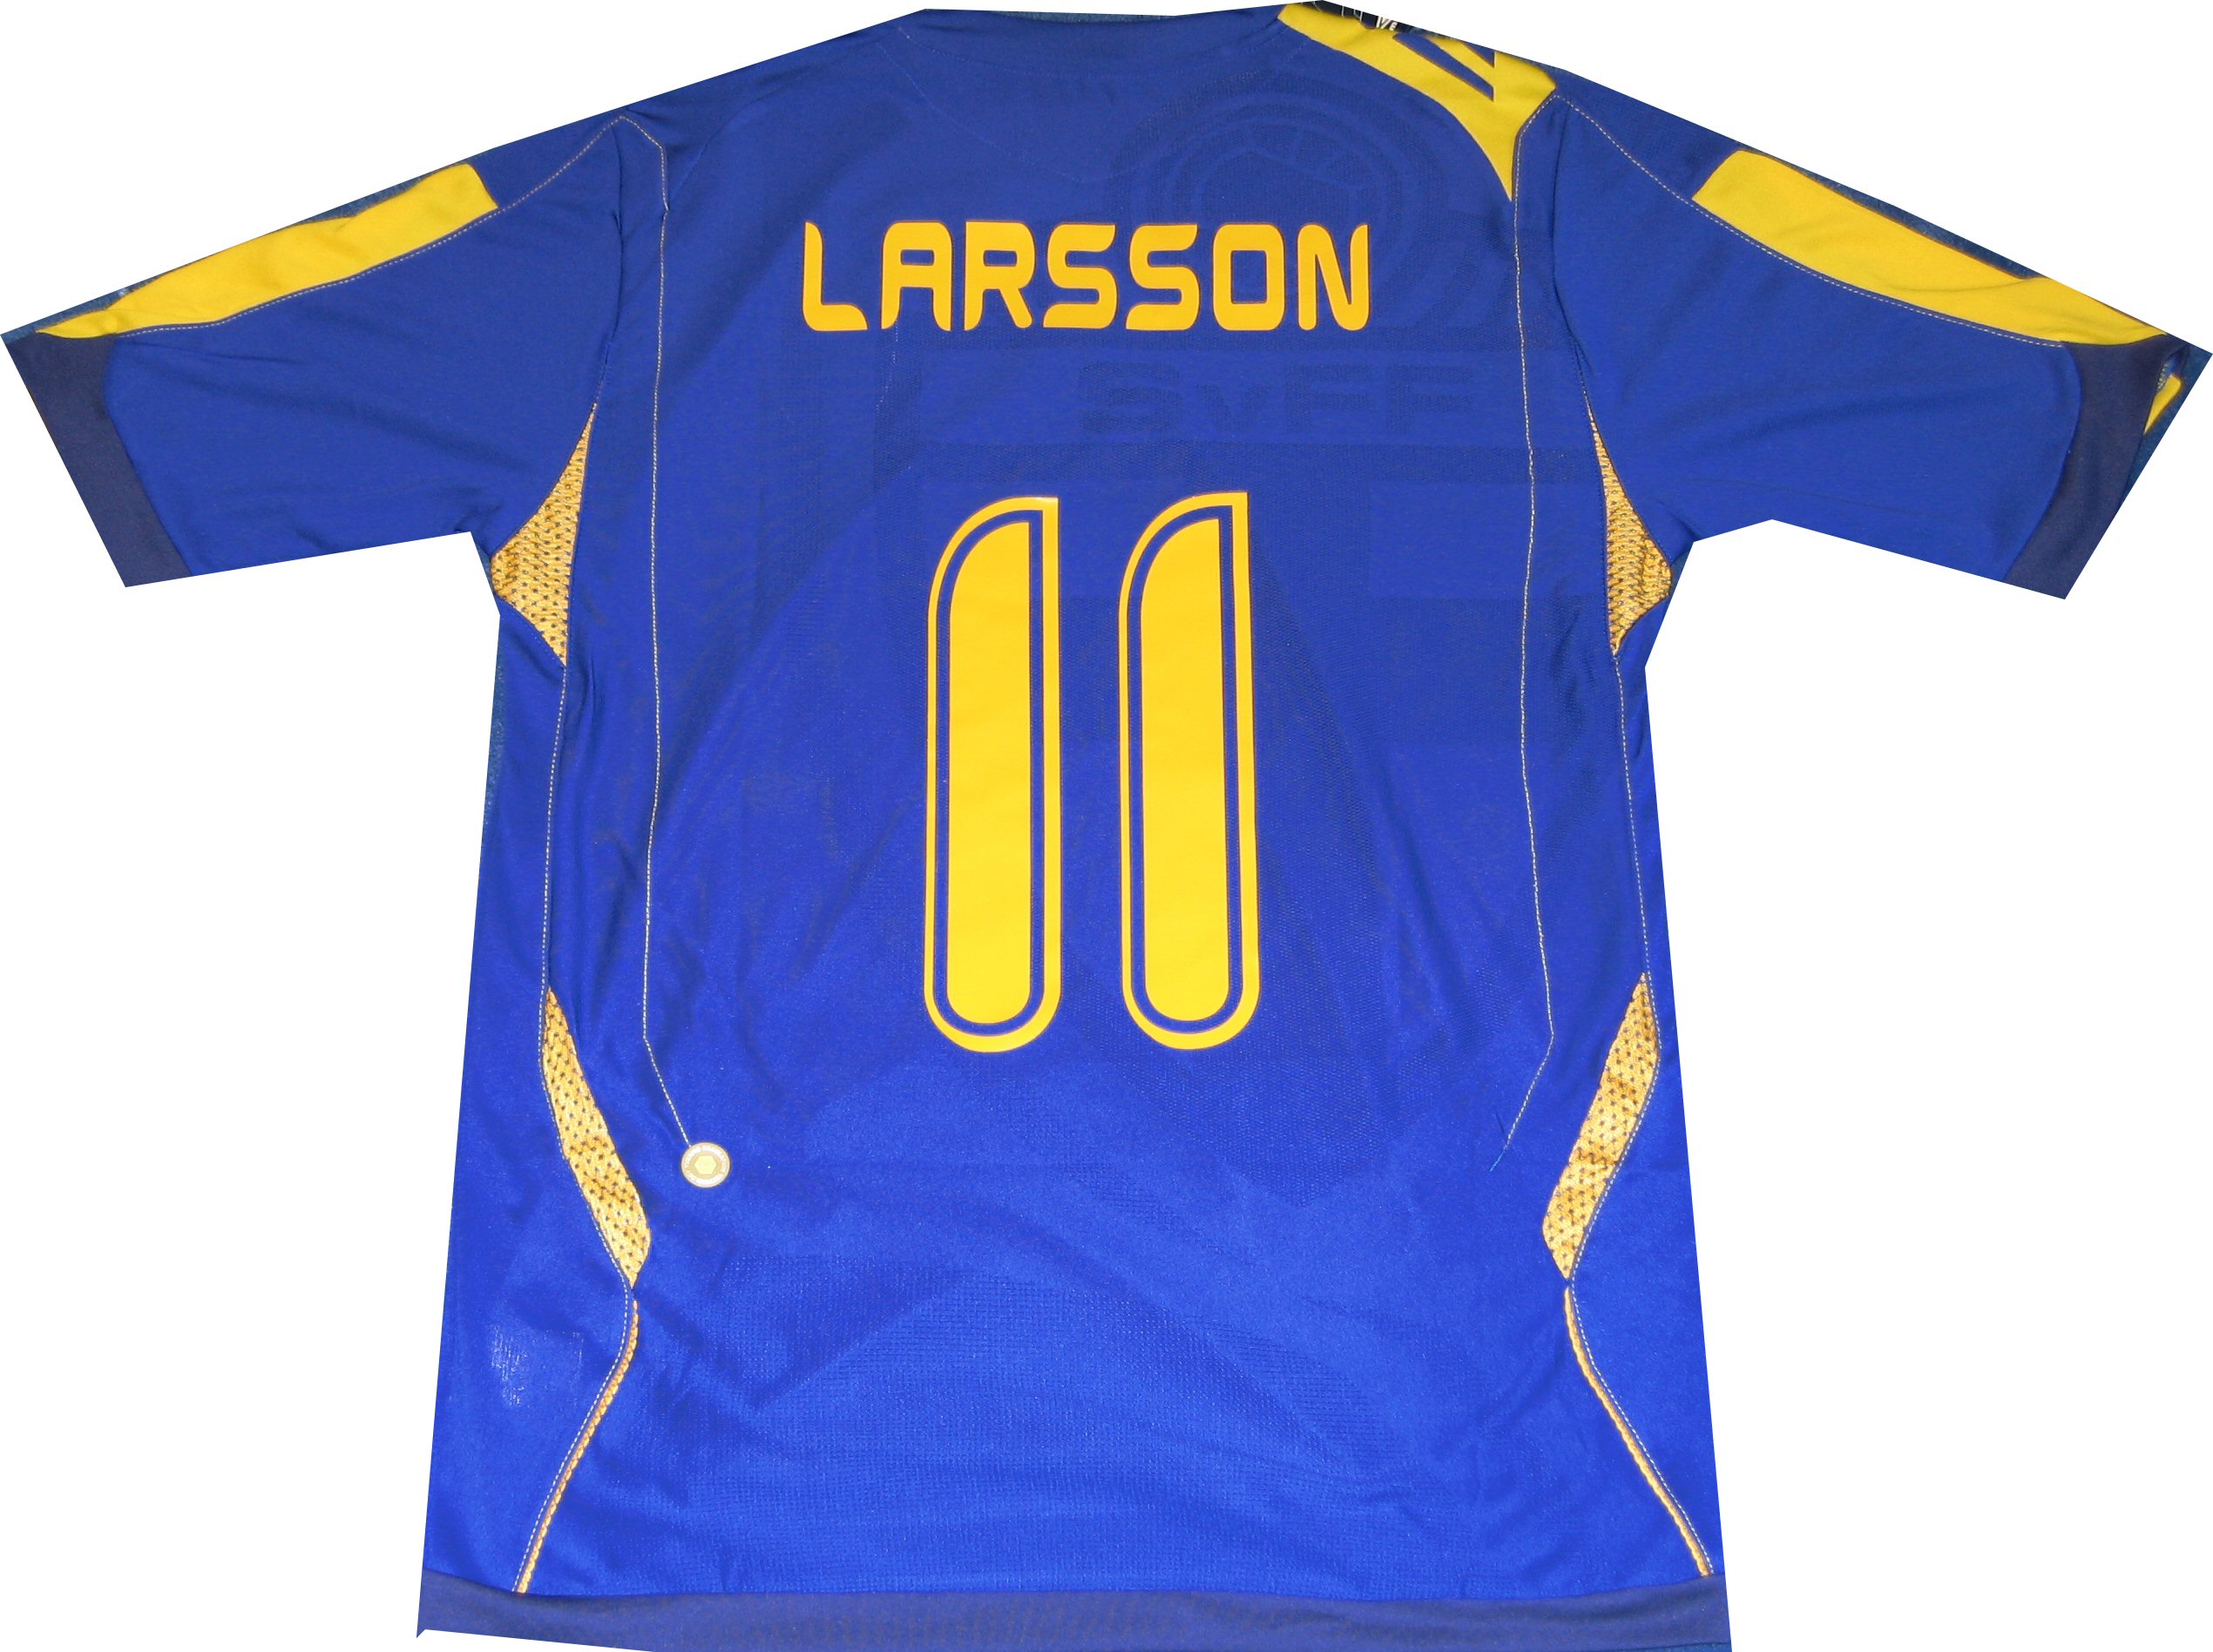 Sweden Umbro Sweden away (Larsson 11) 06/07